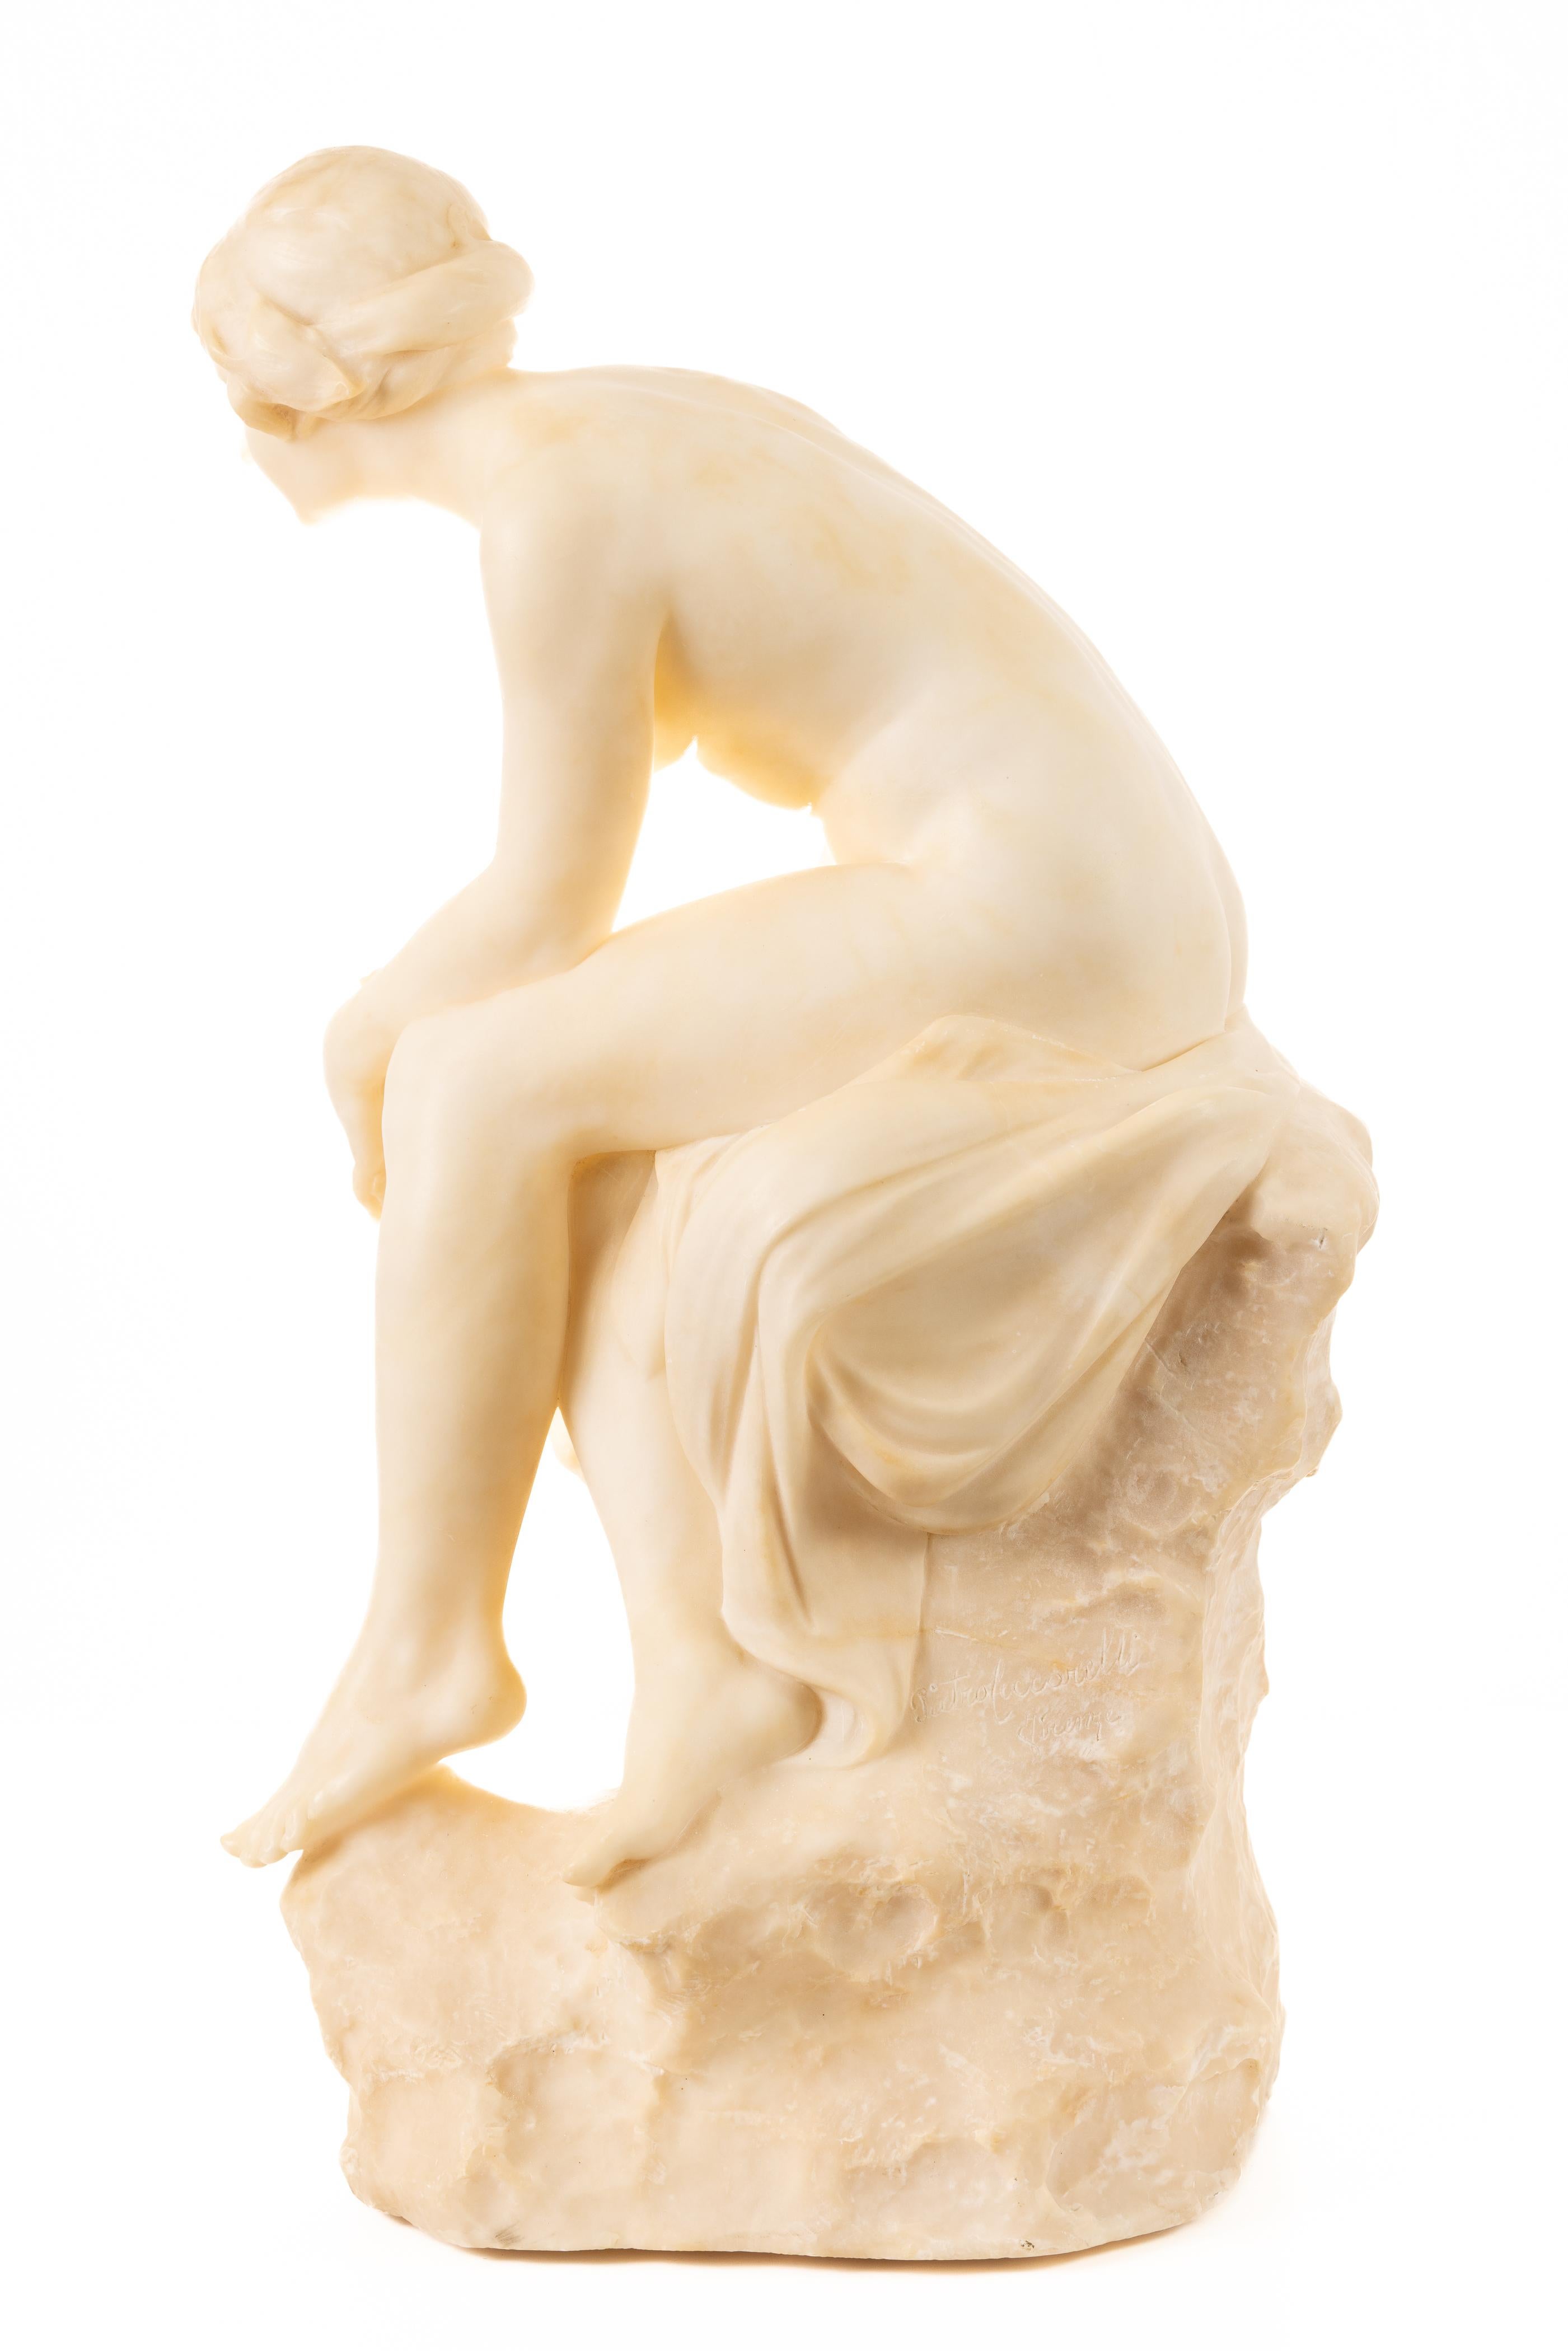 Nude Young Woman - Romantic Sculpture by Pietro Ceccarelli